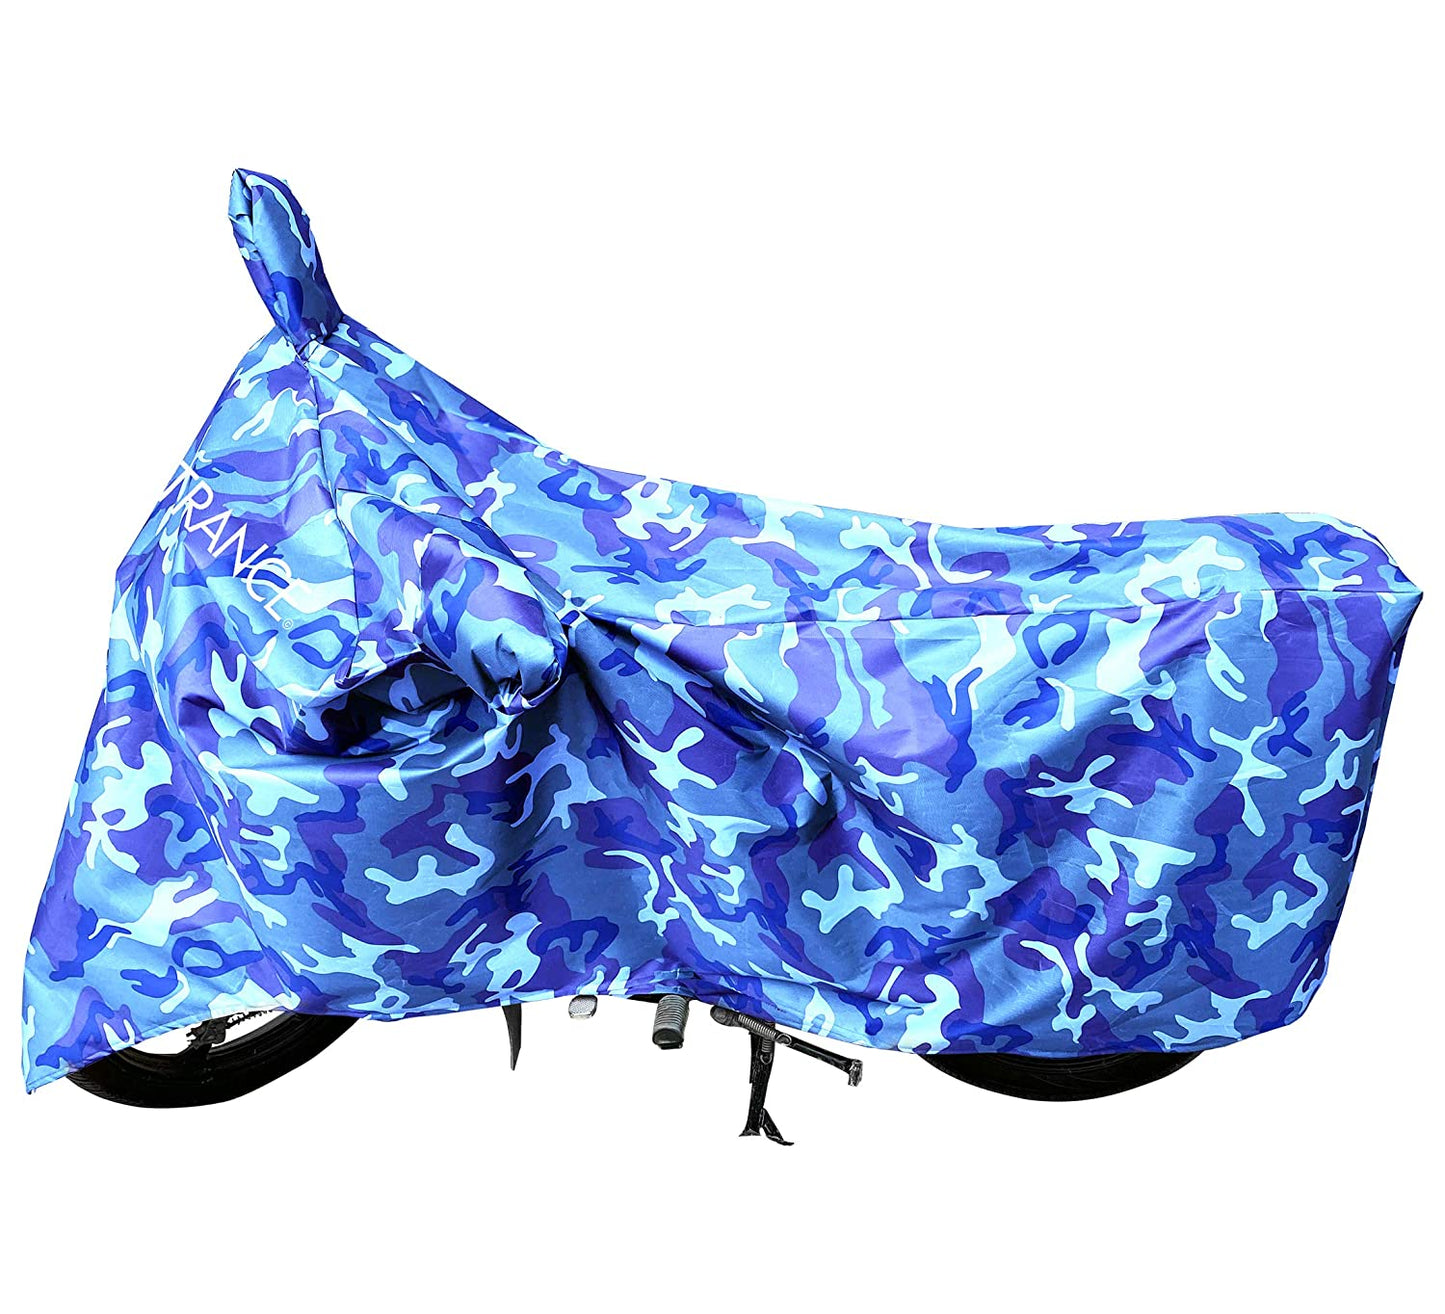 MotoTrance Jungle Bike Body Covers For Kawasaki Ninja 650 - Interlock-Stitched Waterproof and Heat Resistant with Mirror Pockets